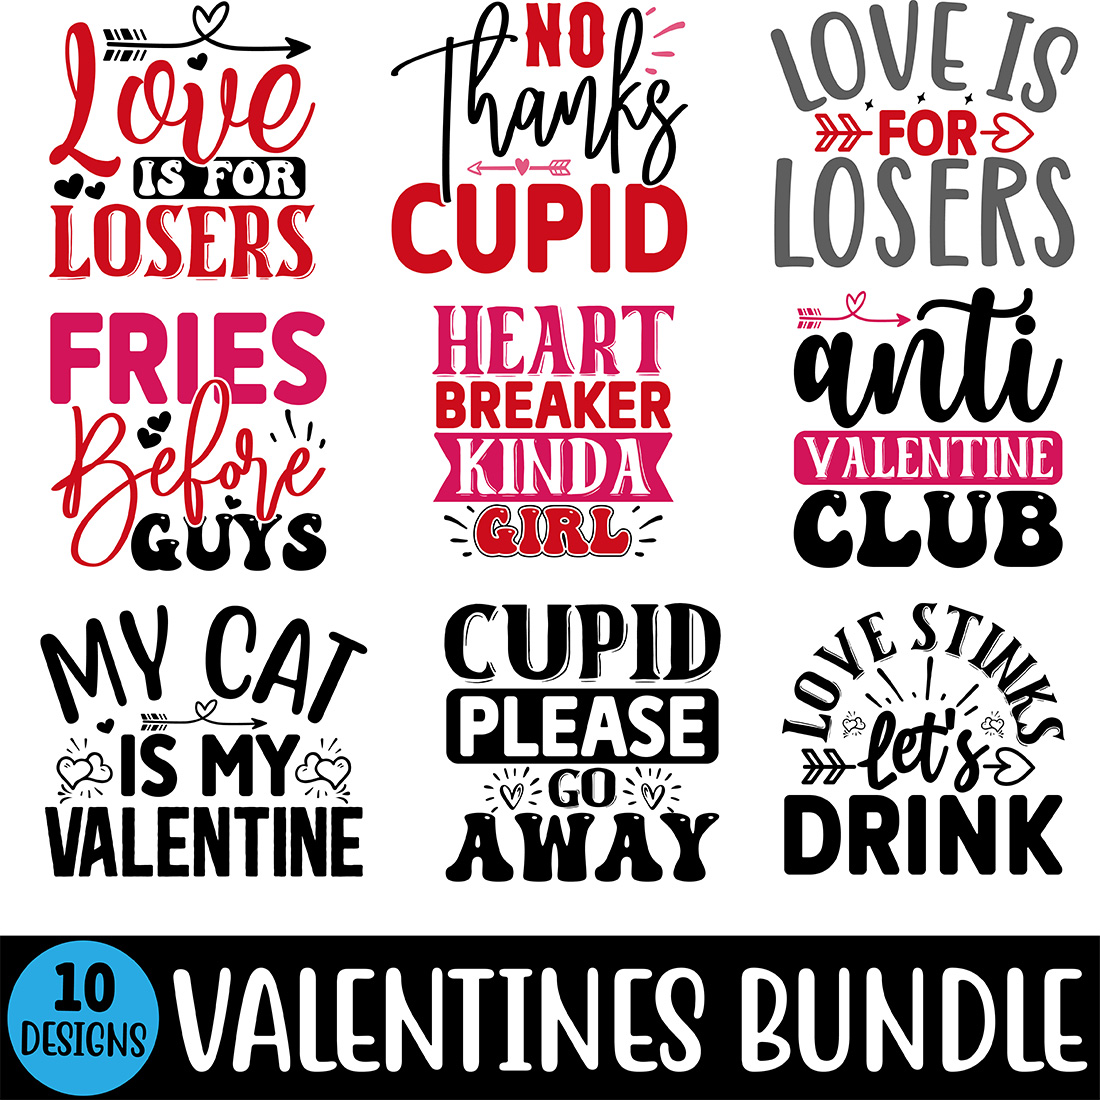 Valentines SVG Bundle main cover.